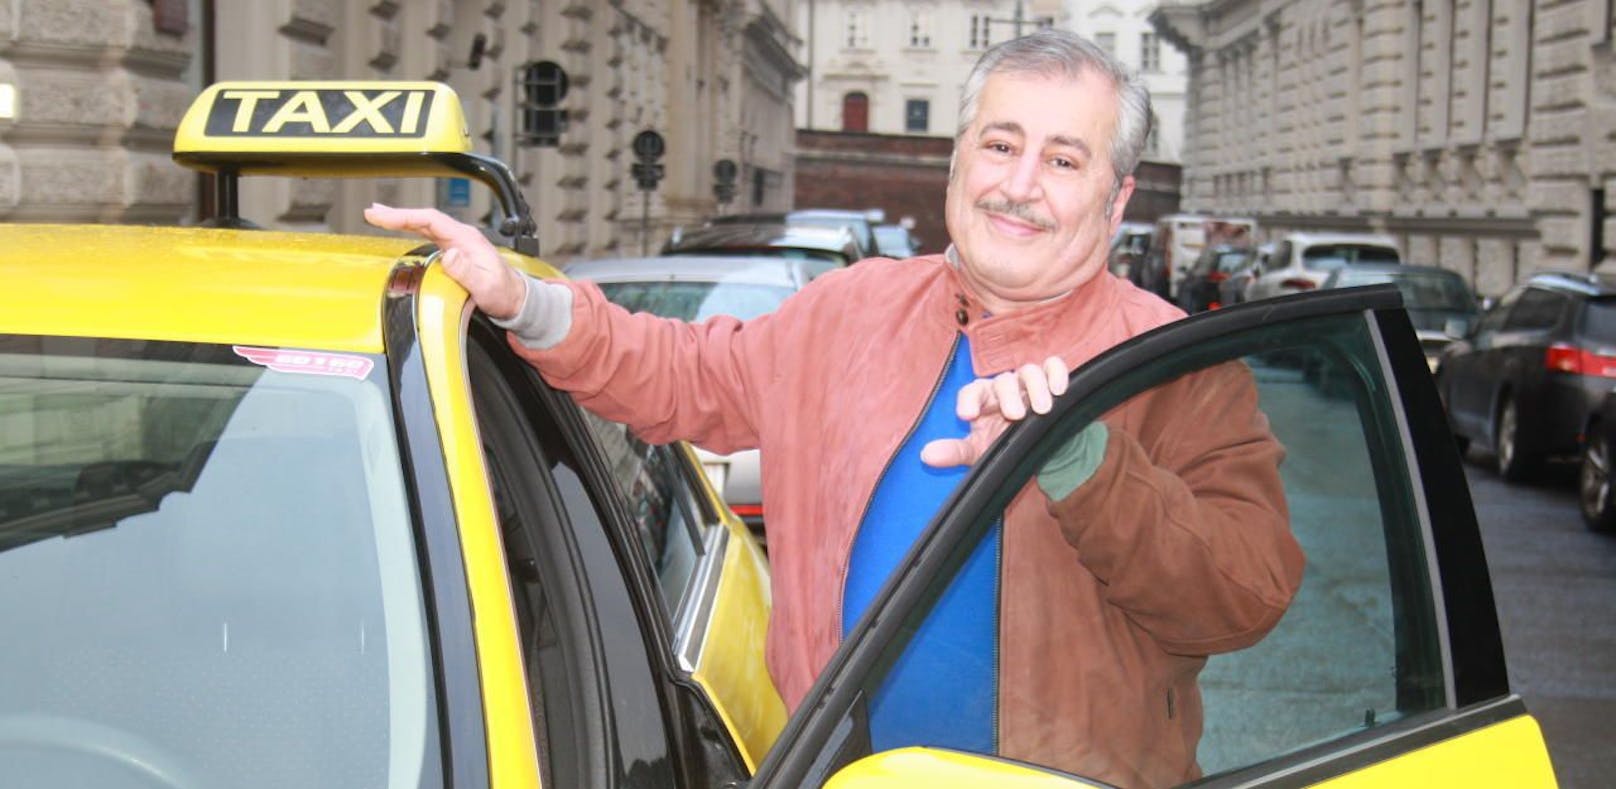 Taxifahrer Mostafa Safai Amini (63) leistete Erste Hilfe, rettete einen seiner Fahrgäste das Leben. 